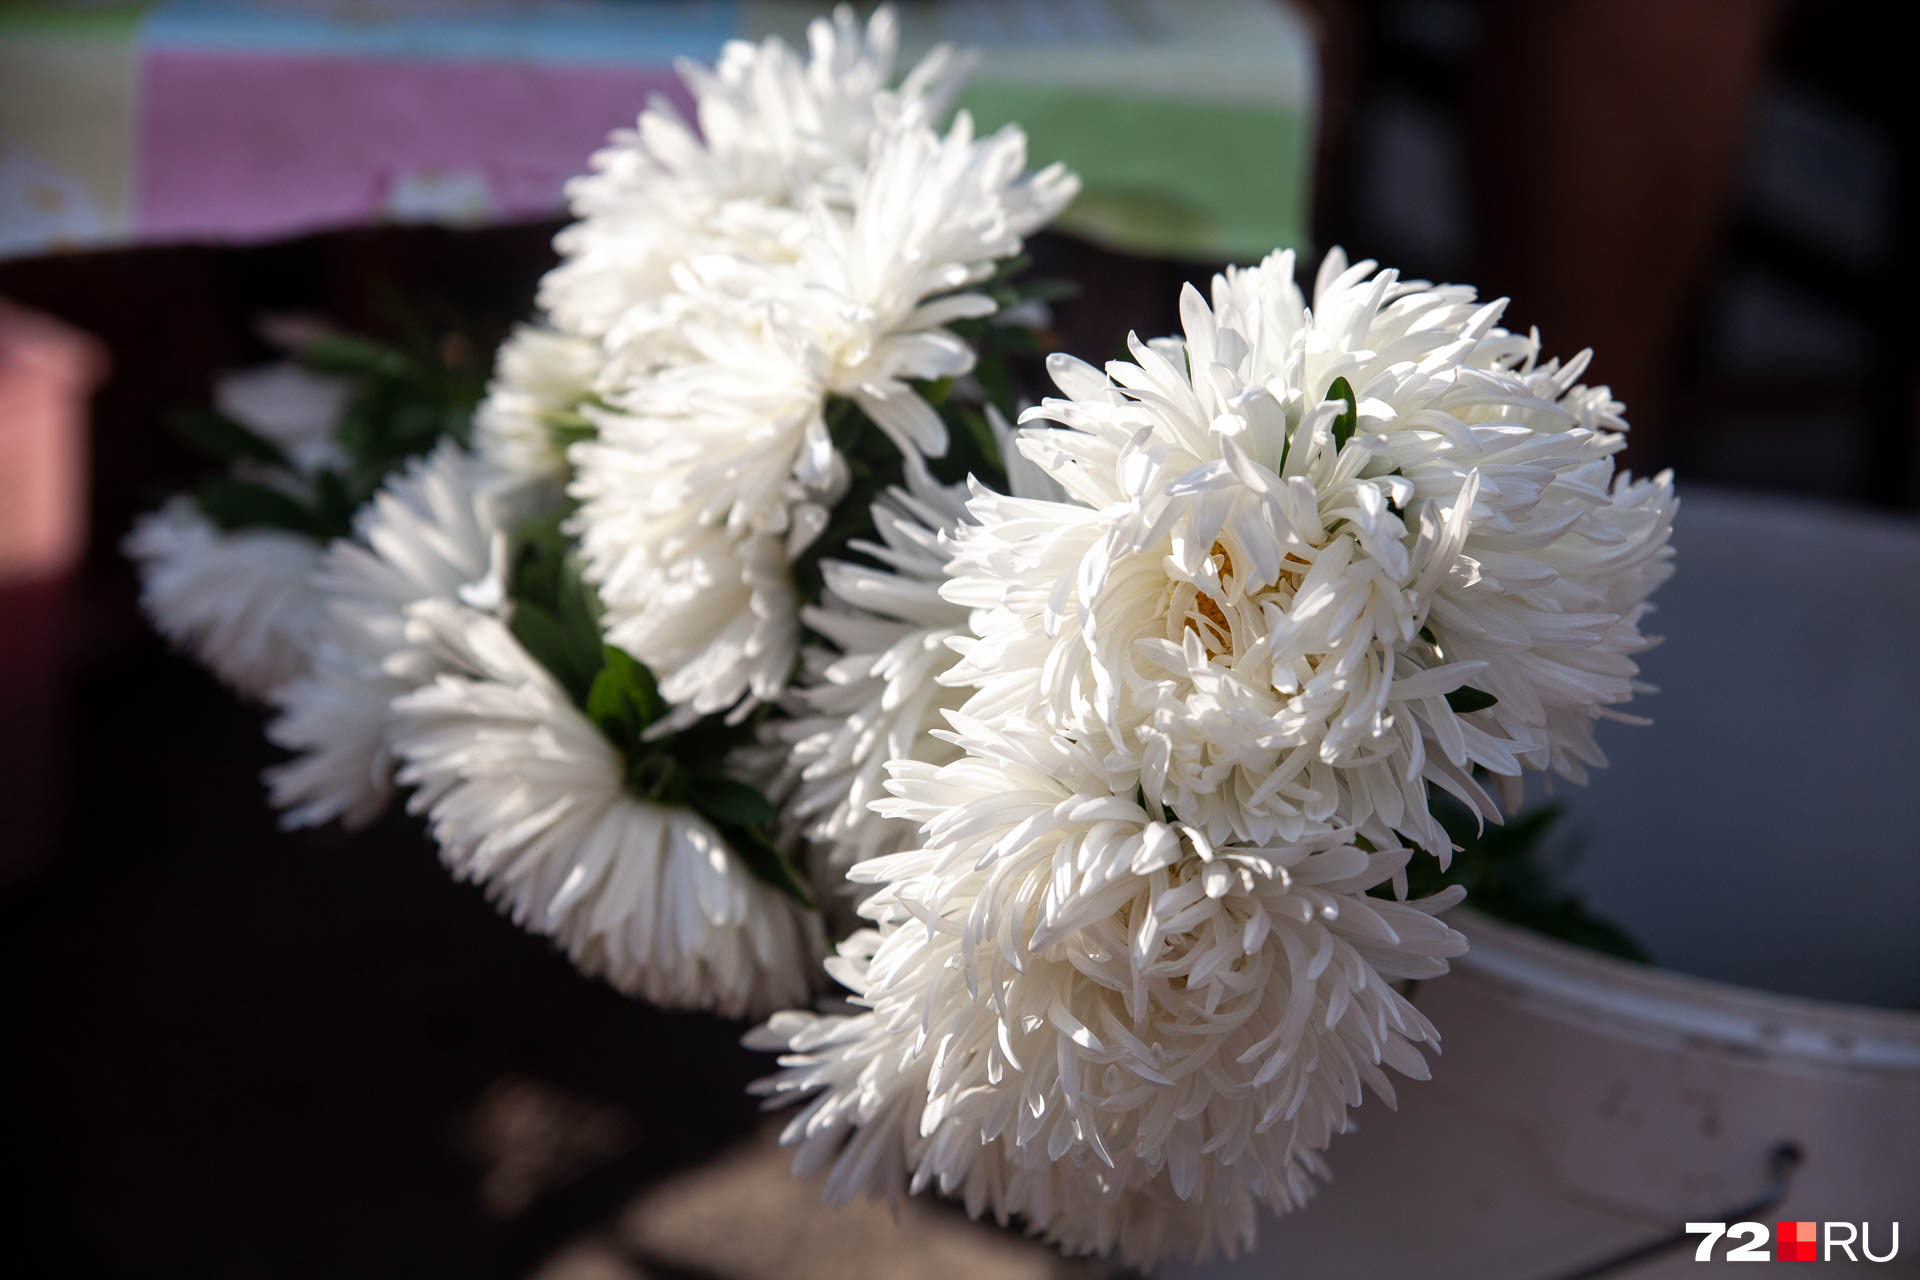 Астра — любой цветок за 30 рублей